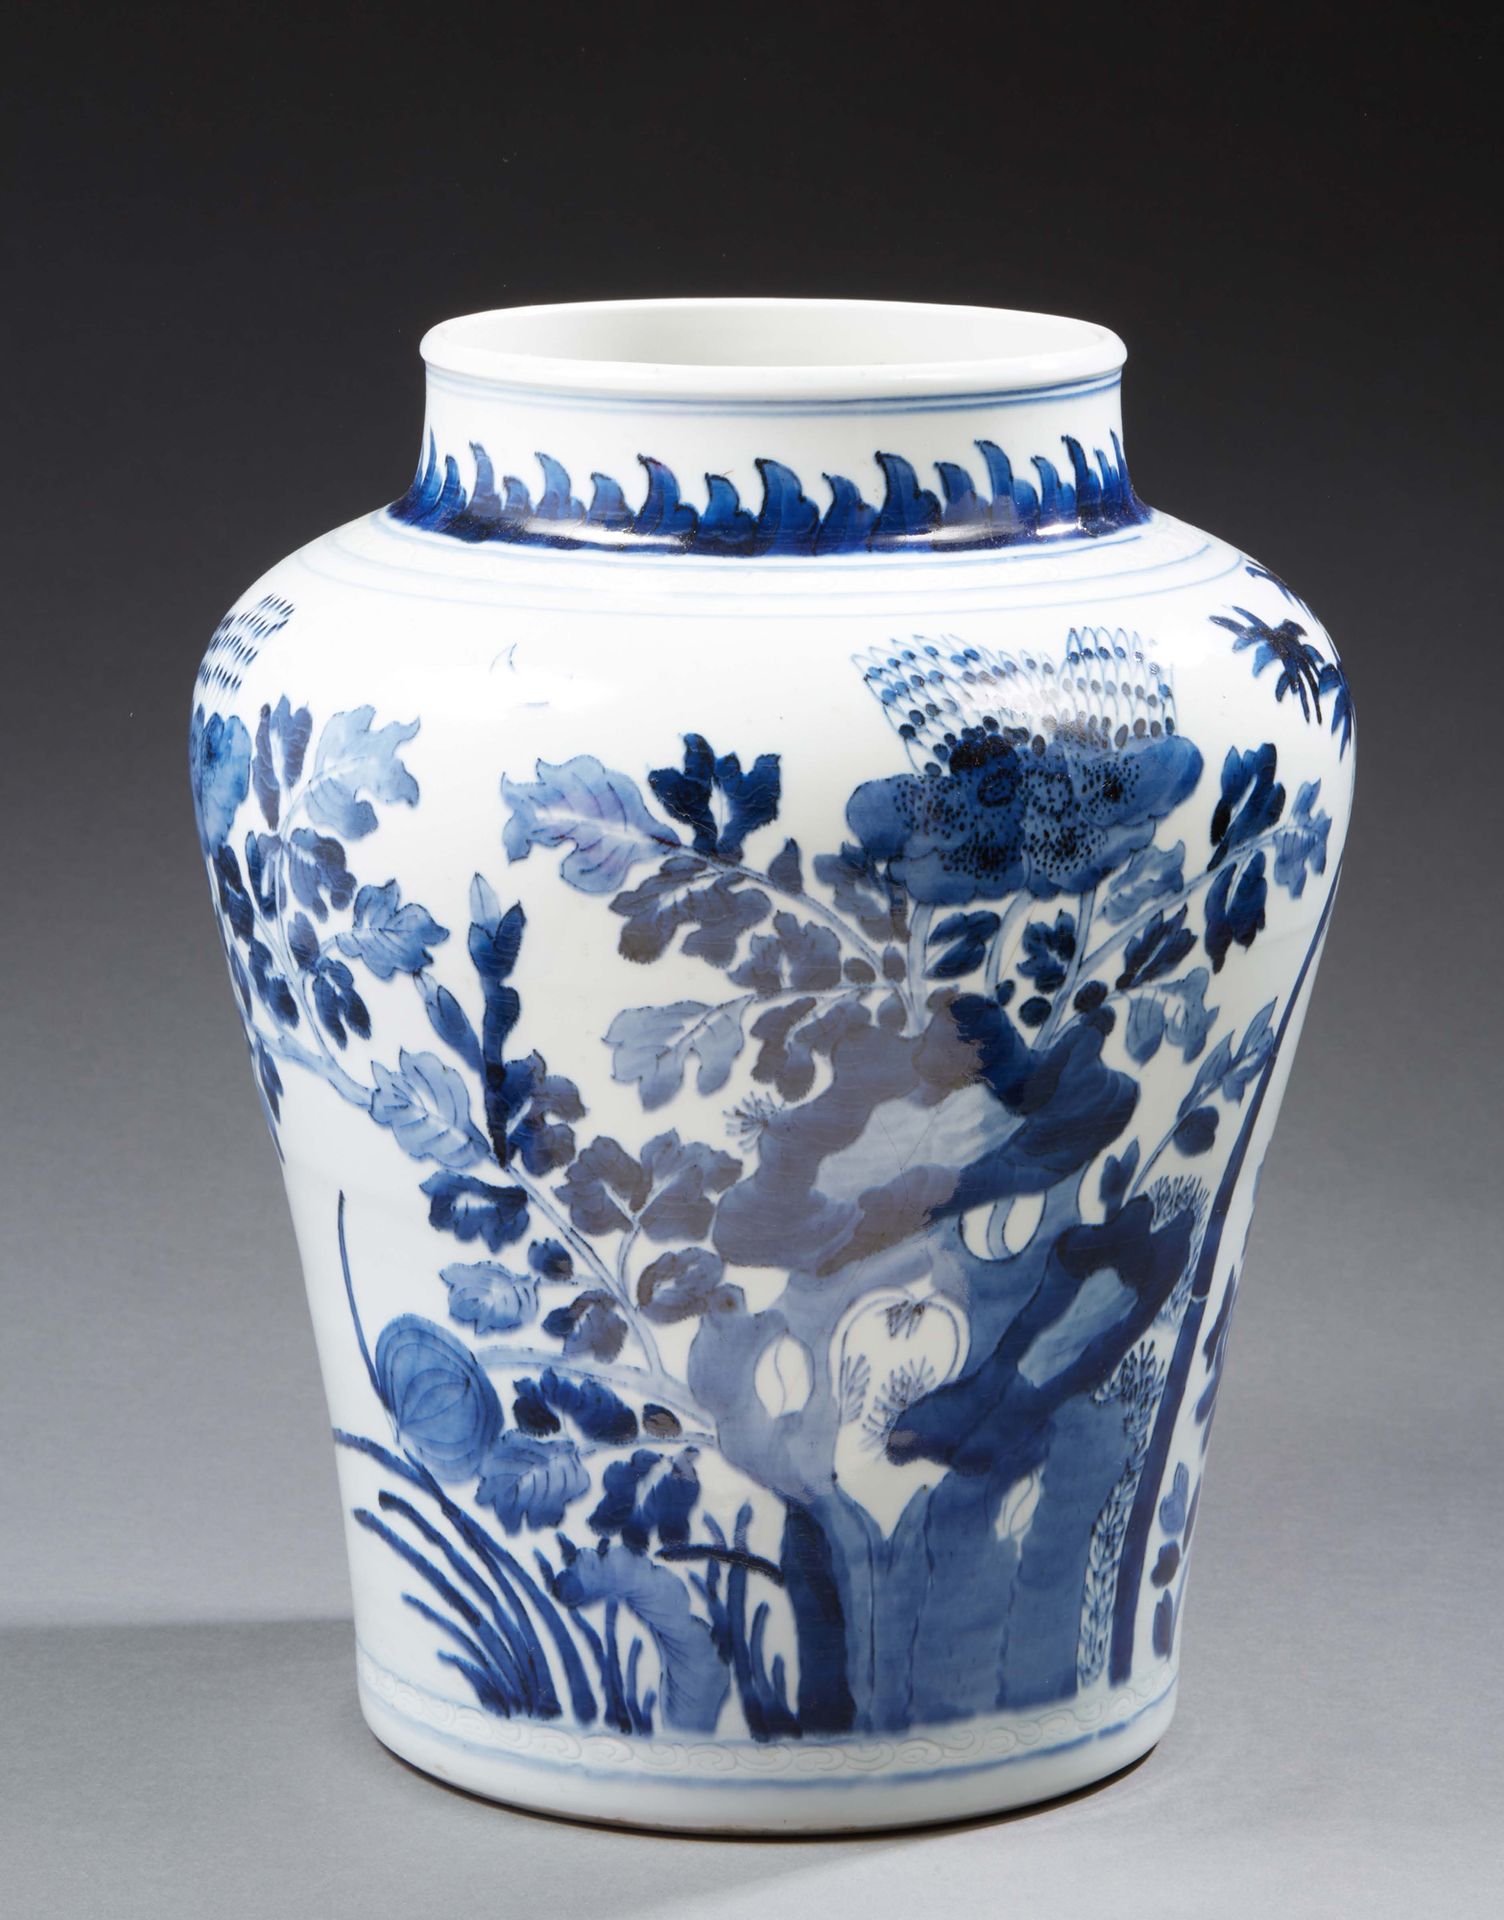 CHINE 瓷器柱形花瓶，釉下蓝色装饰鸟类、岩石和灌木
17世纪现代时期的味道
高：39厘米